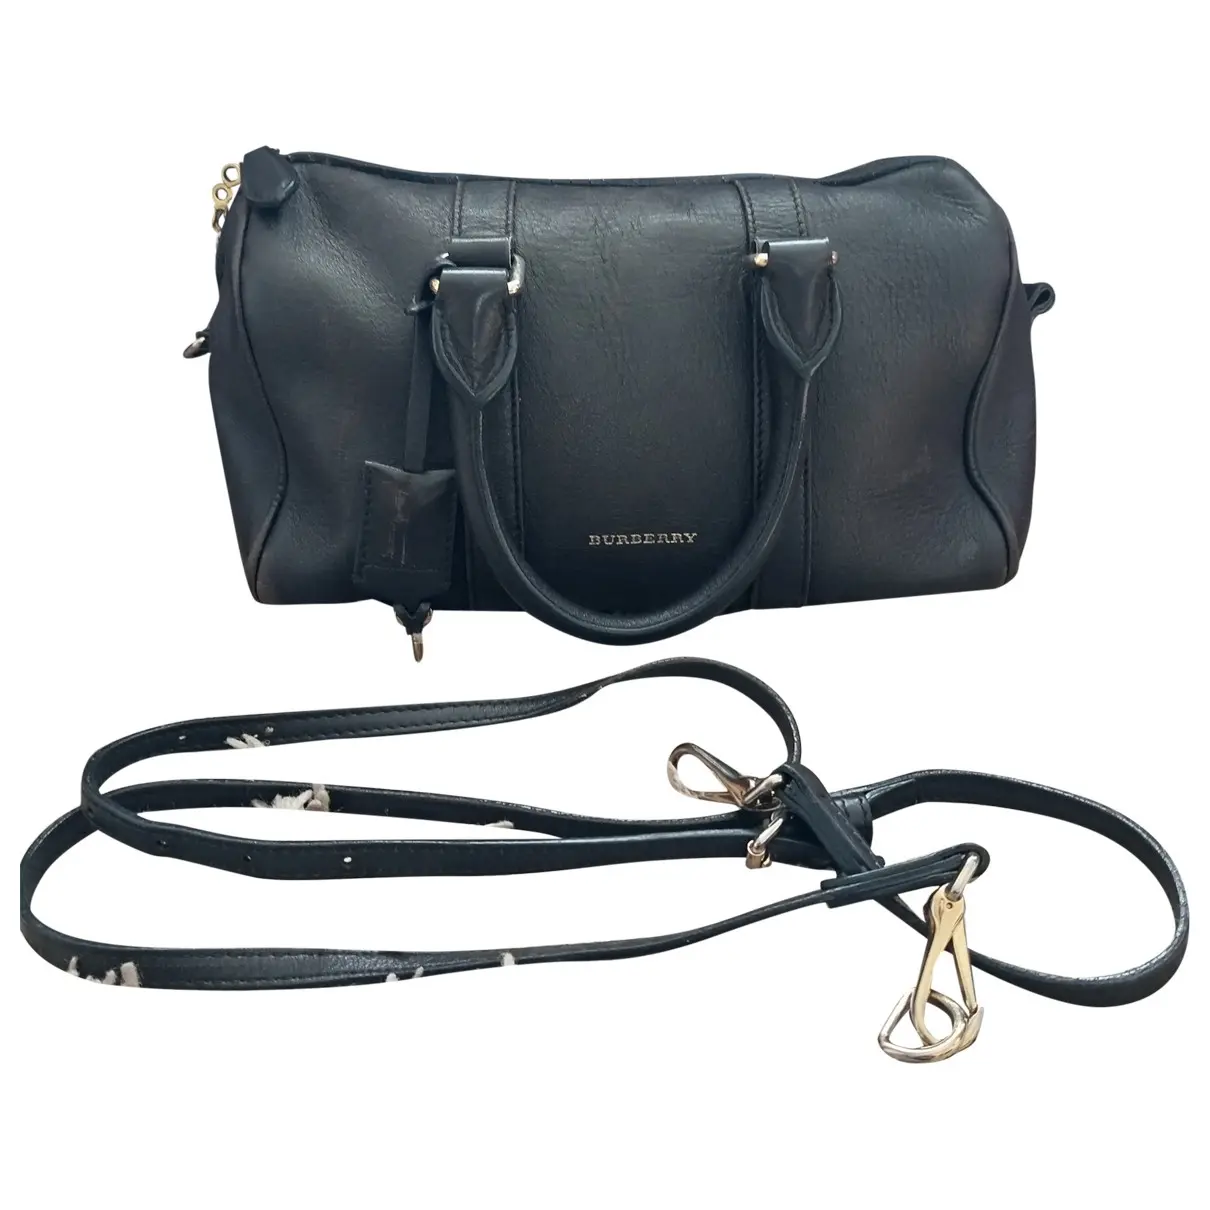 The Barrel leather handbag